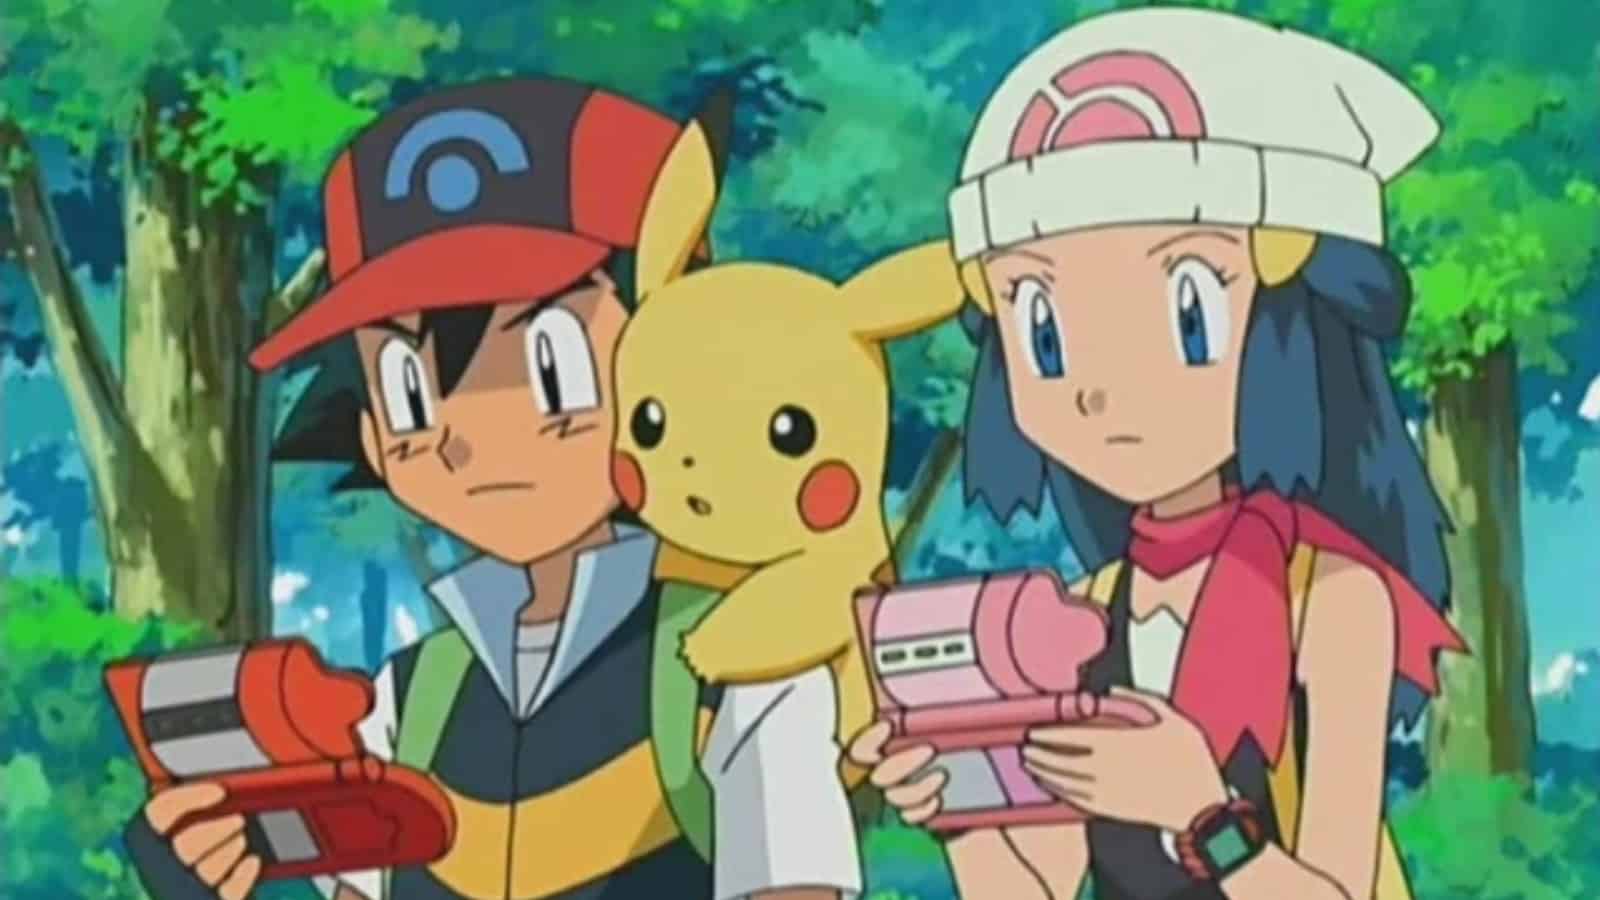 Ash Ketchum and Dawn using their Pokedex in the Pokemon anime